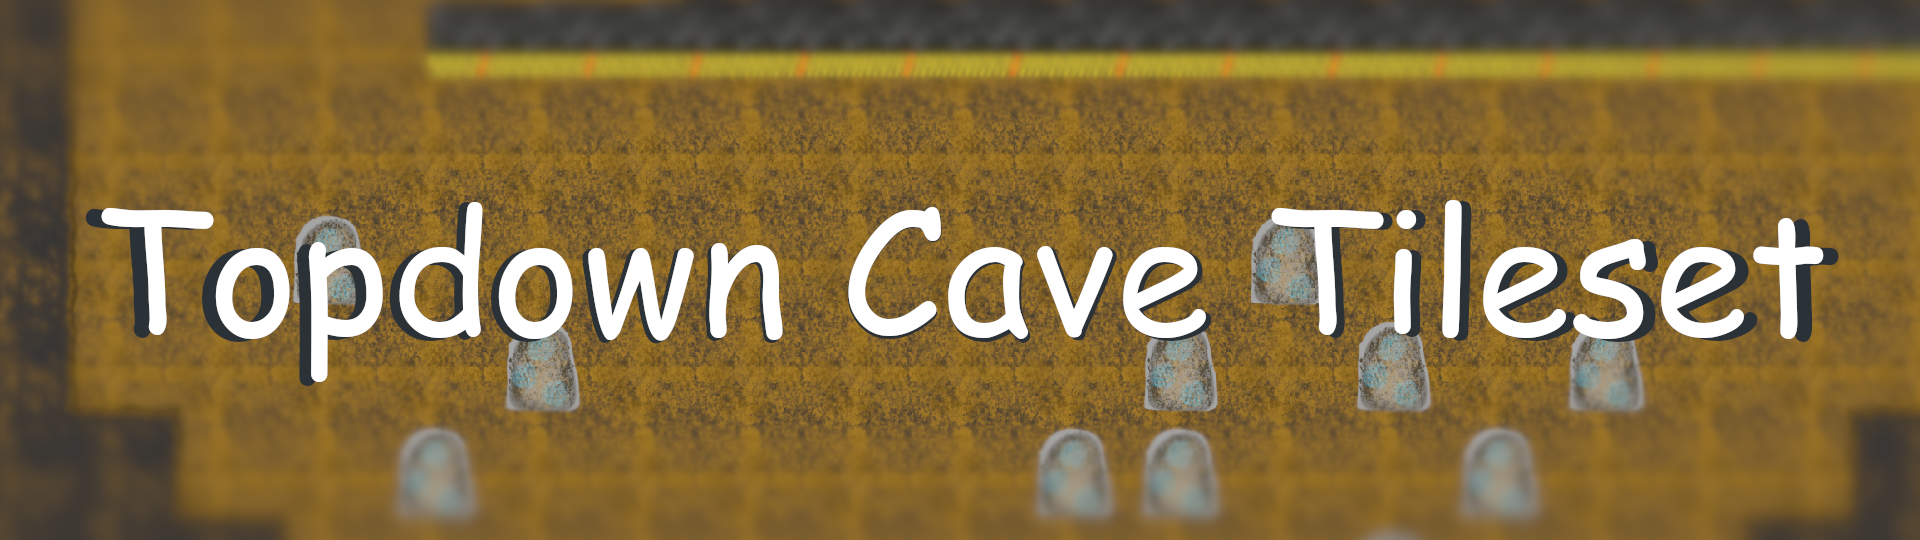 Topdown Cave Tileset